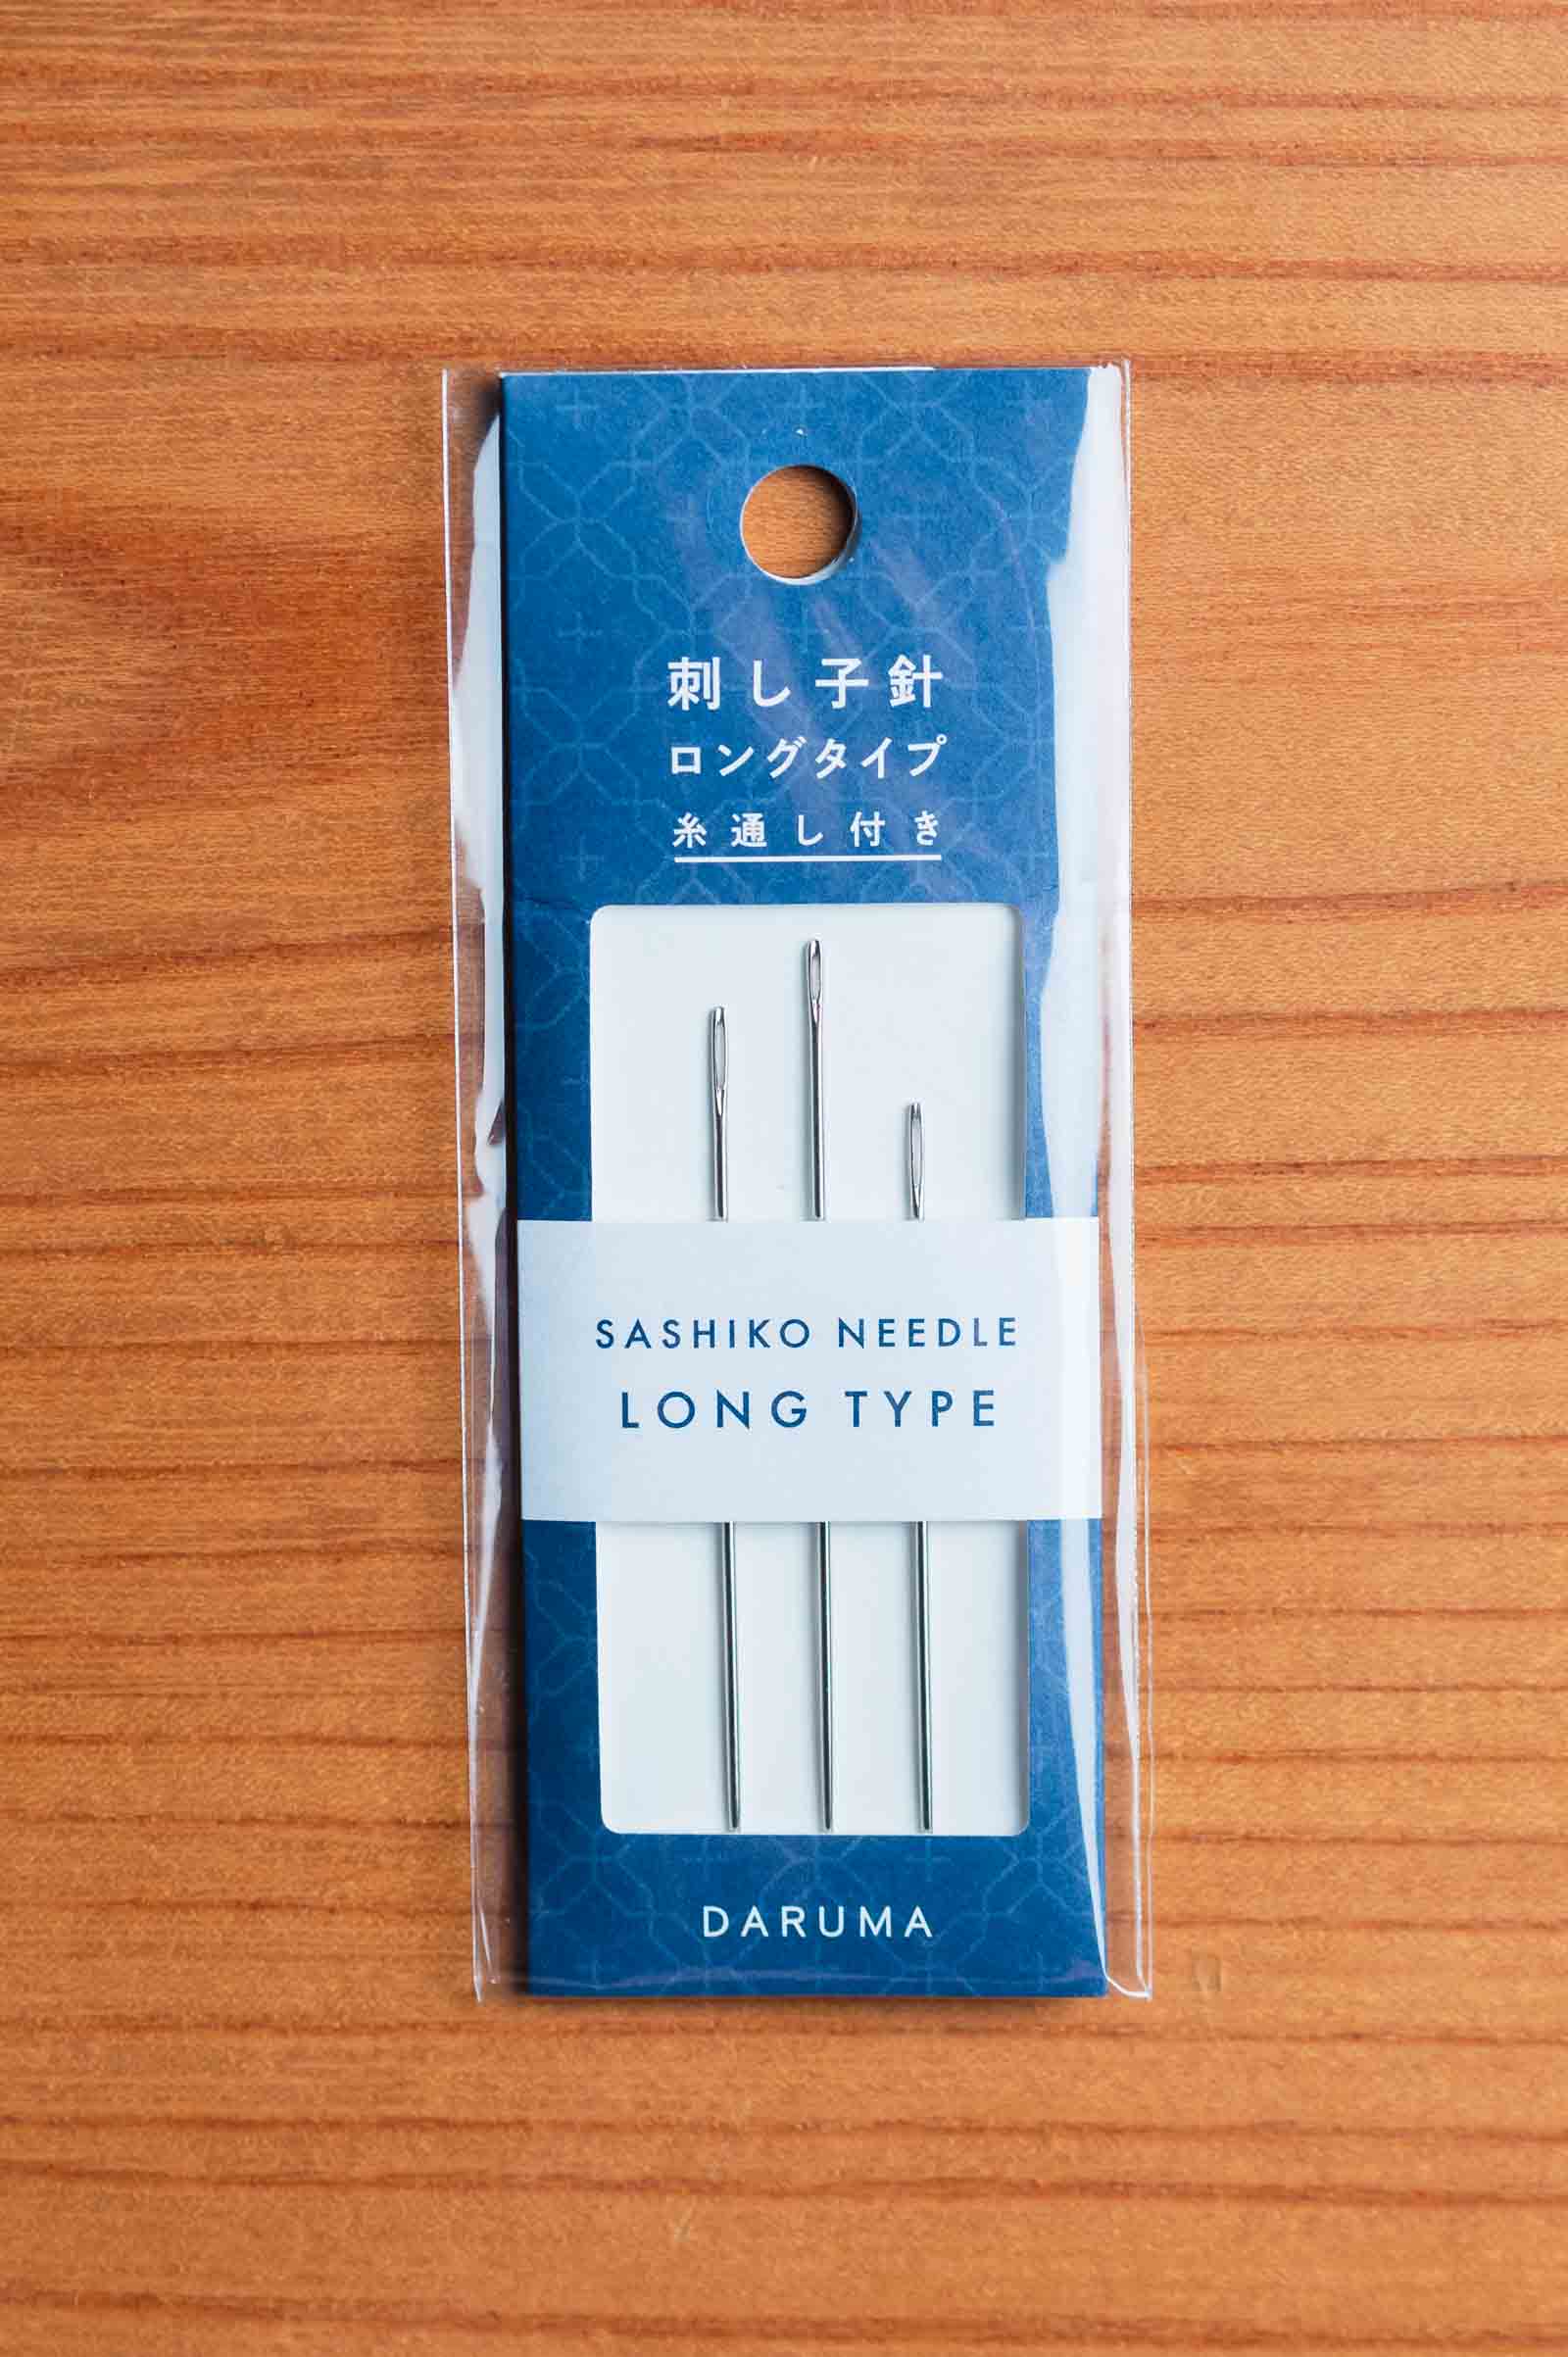 Long type Daruma sashiko needles in their package